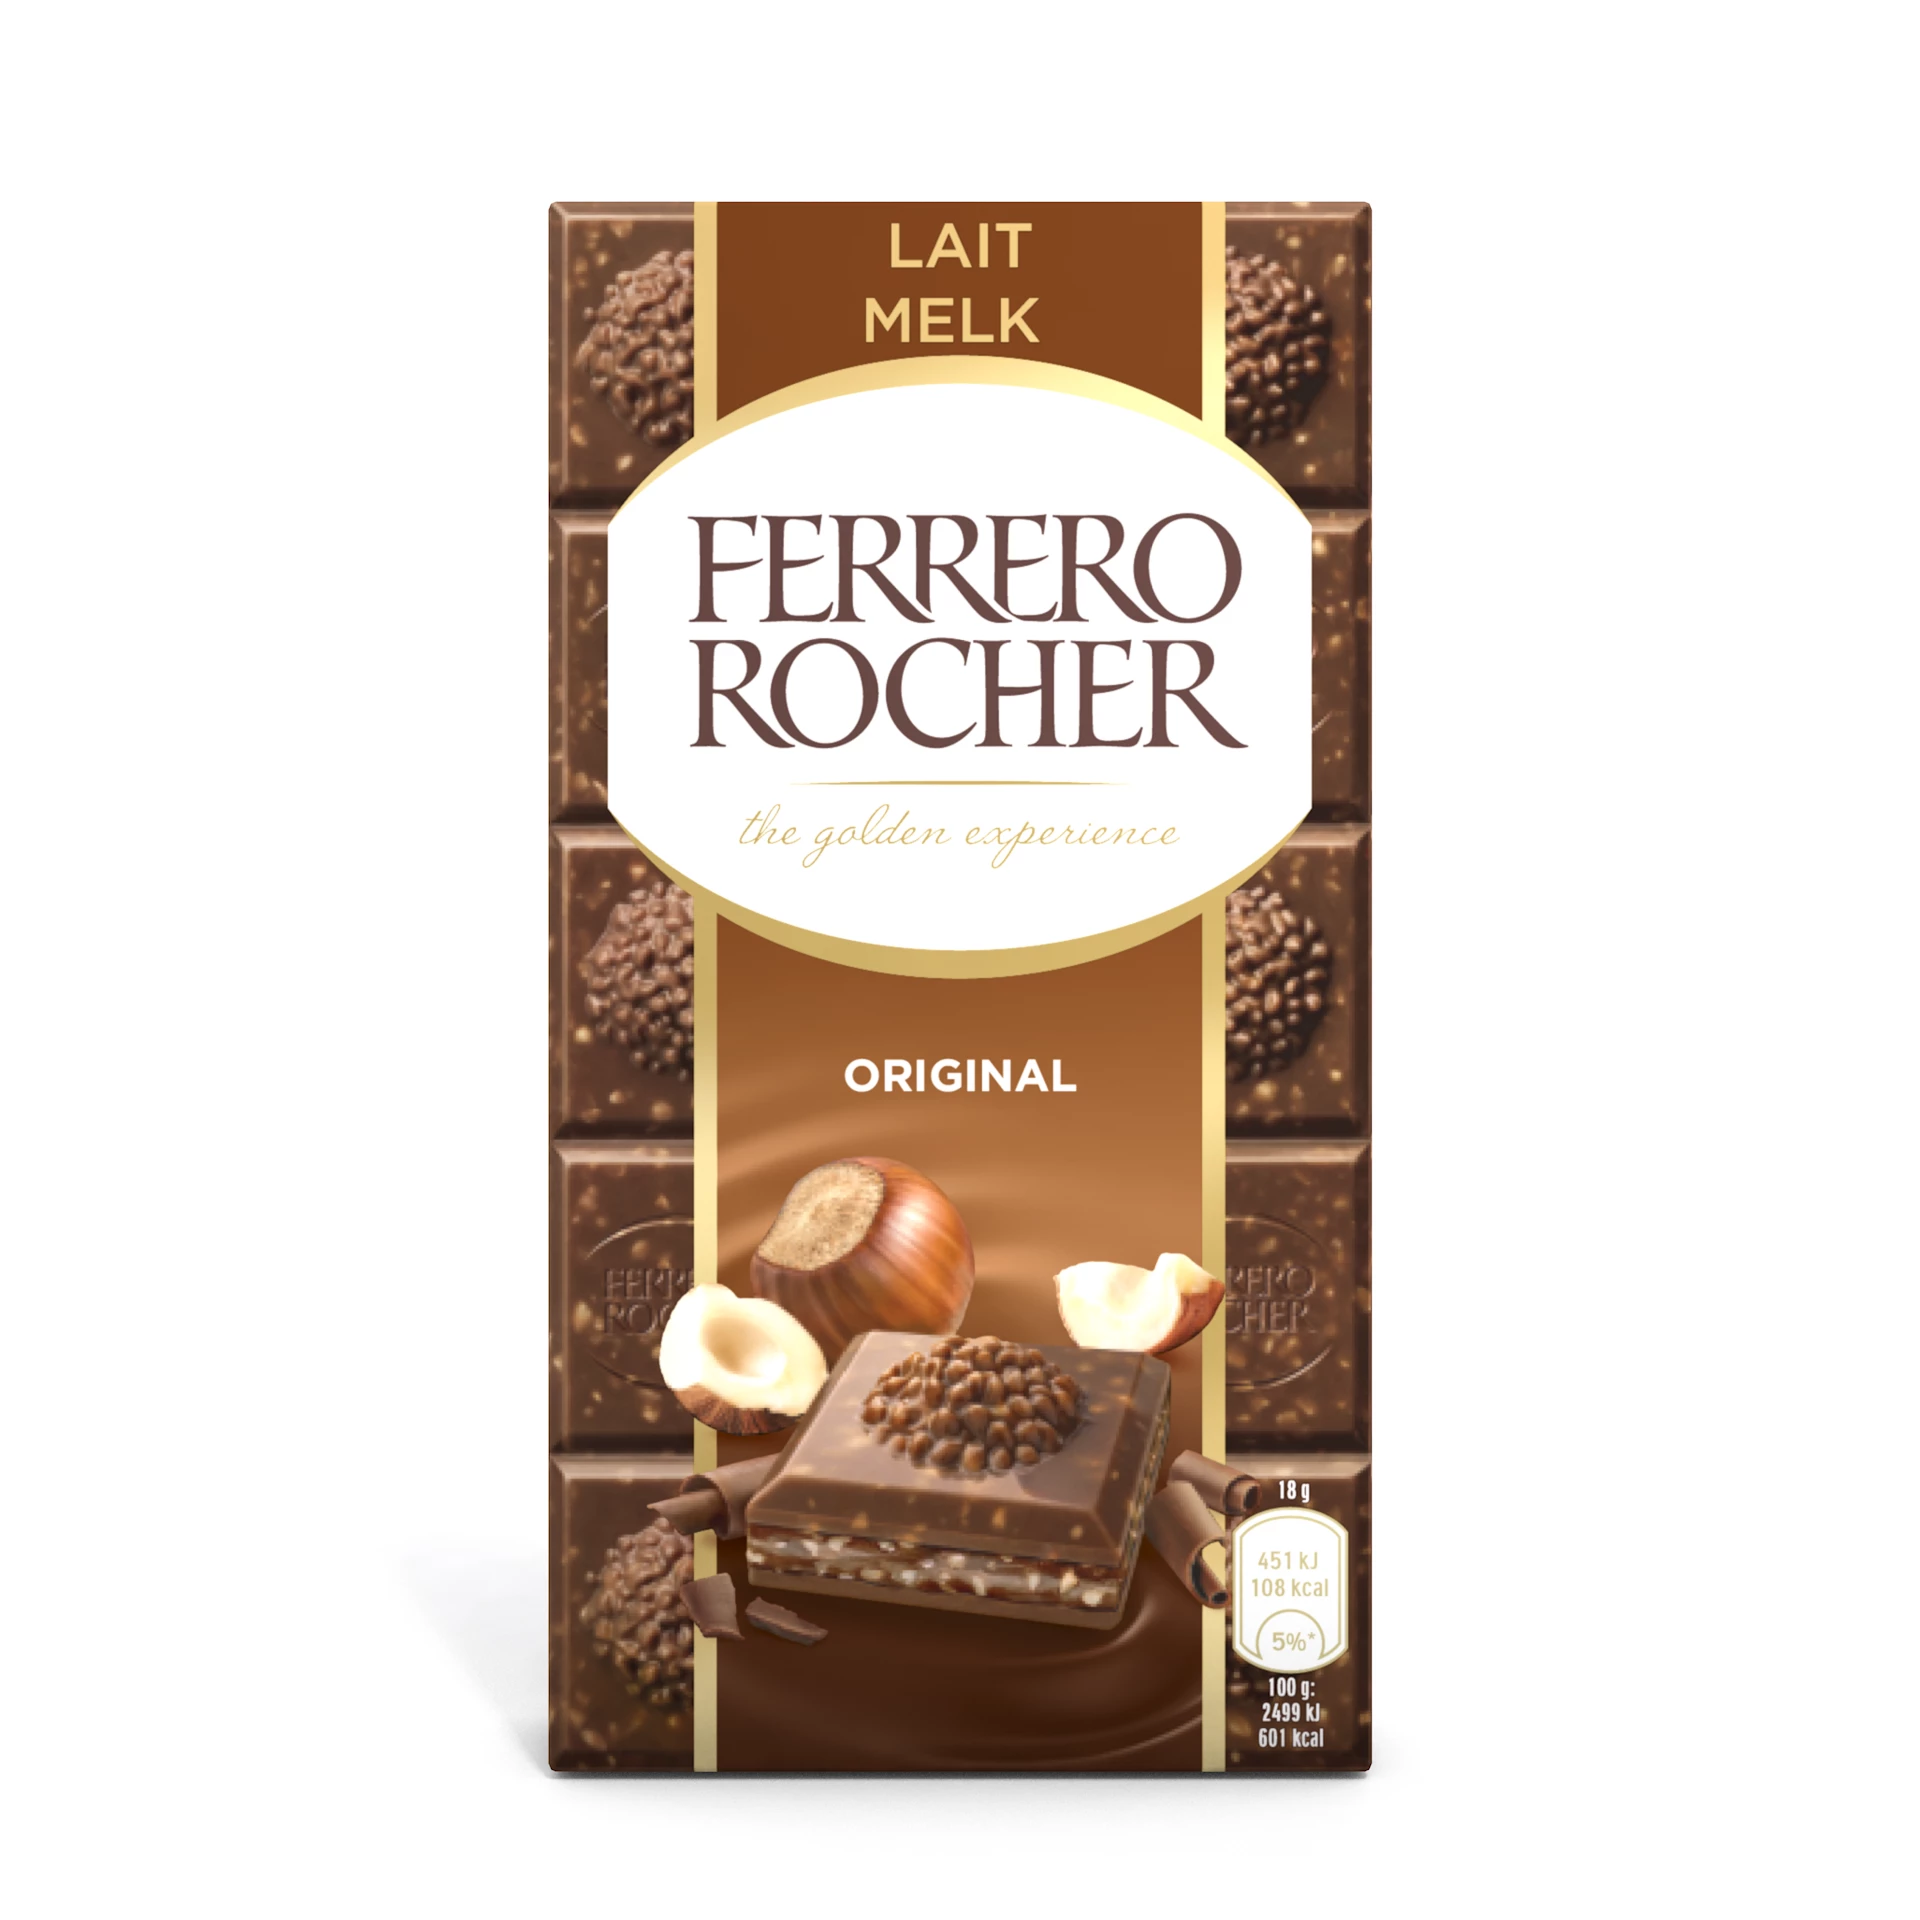 Ferrero Rocher Lait Noisette, 90g - FERRERO